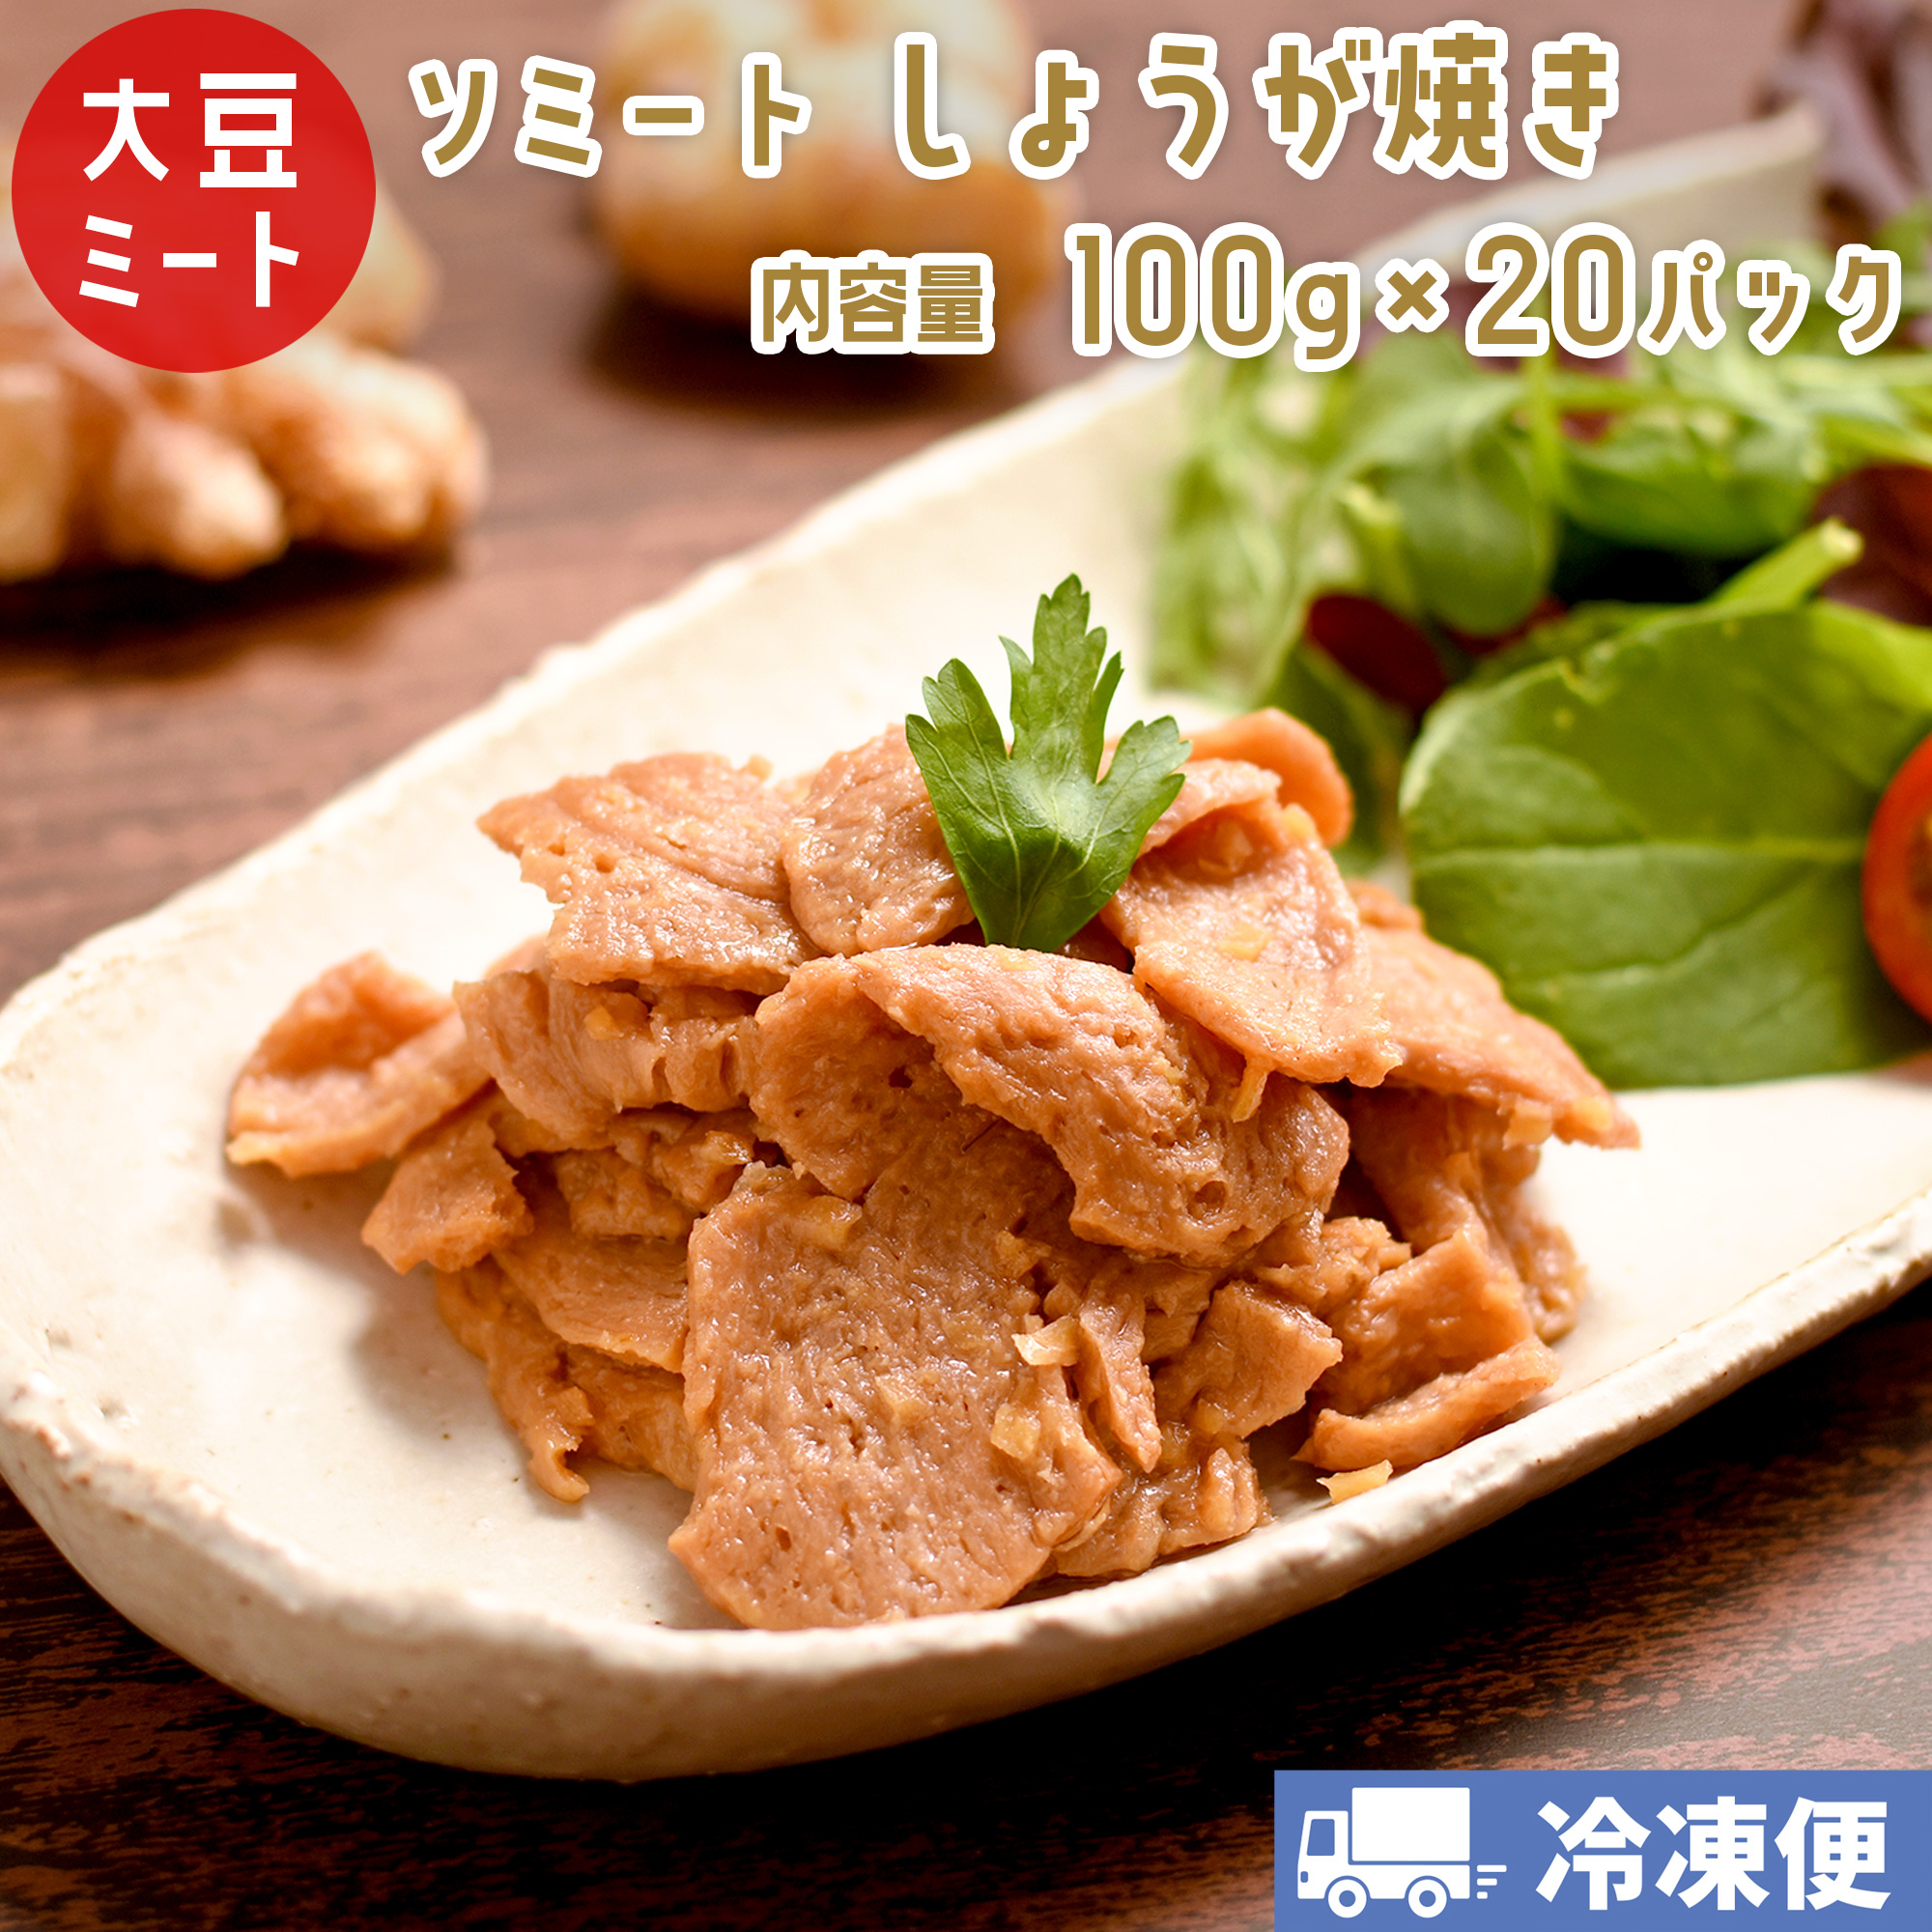 Shogayaki (Ginger “Pork”)